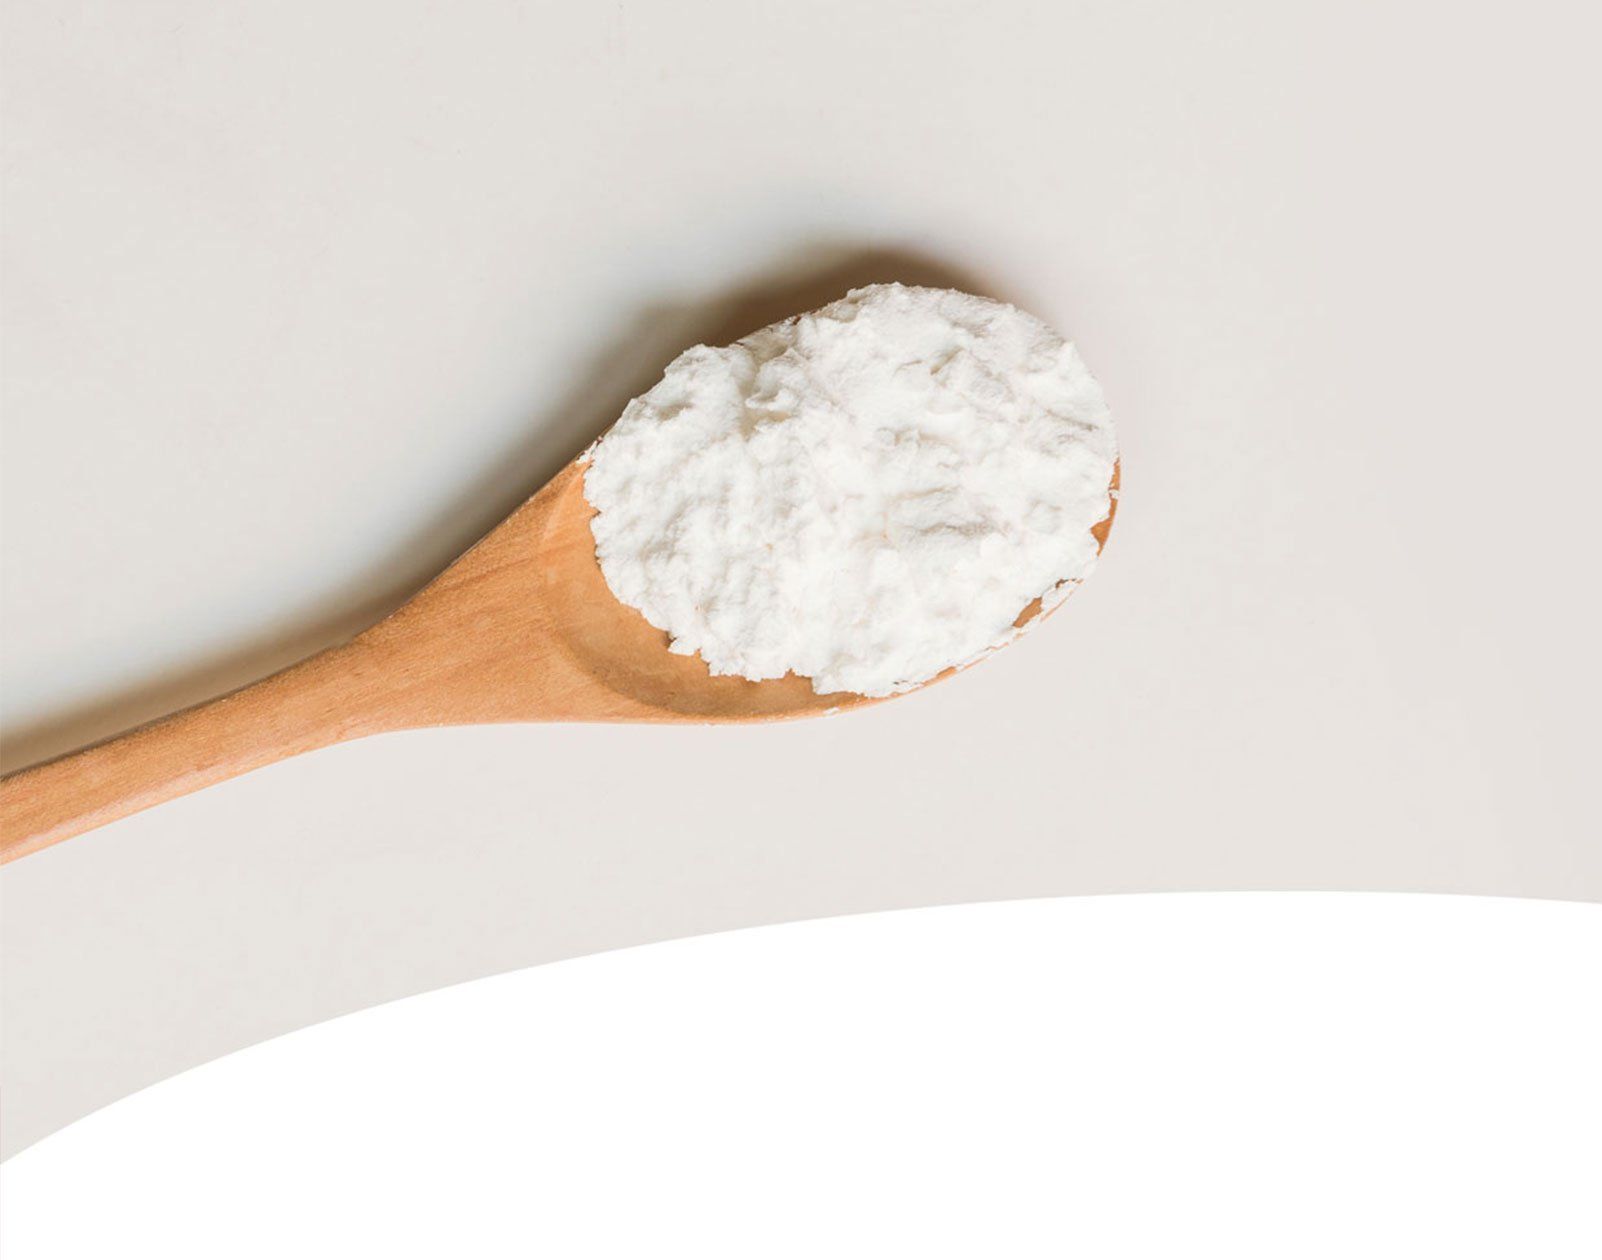 Spoon of flour